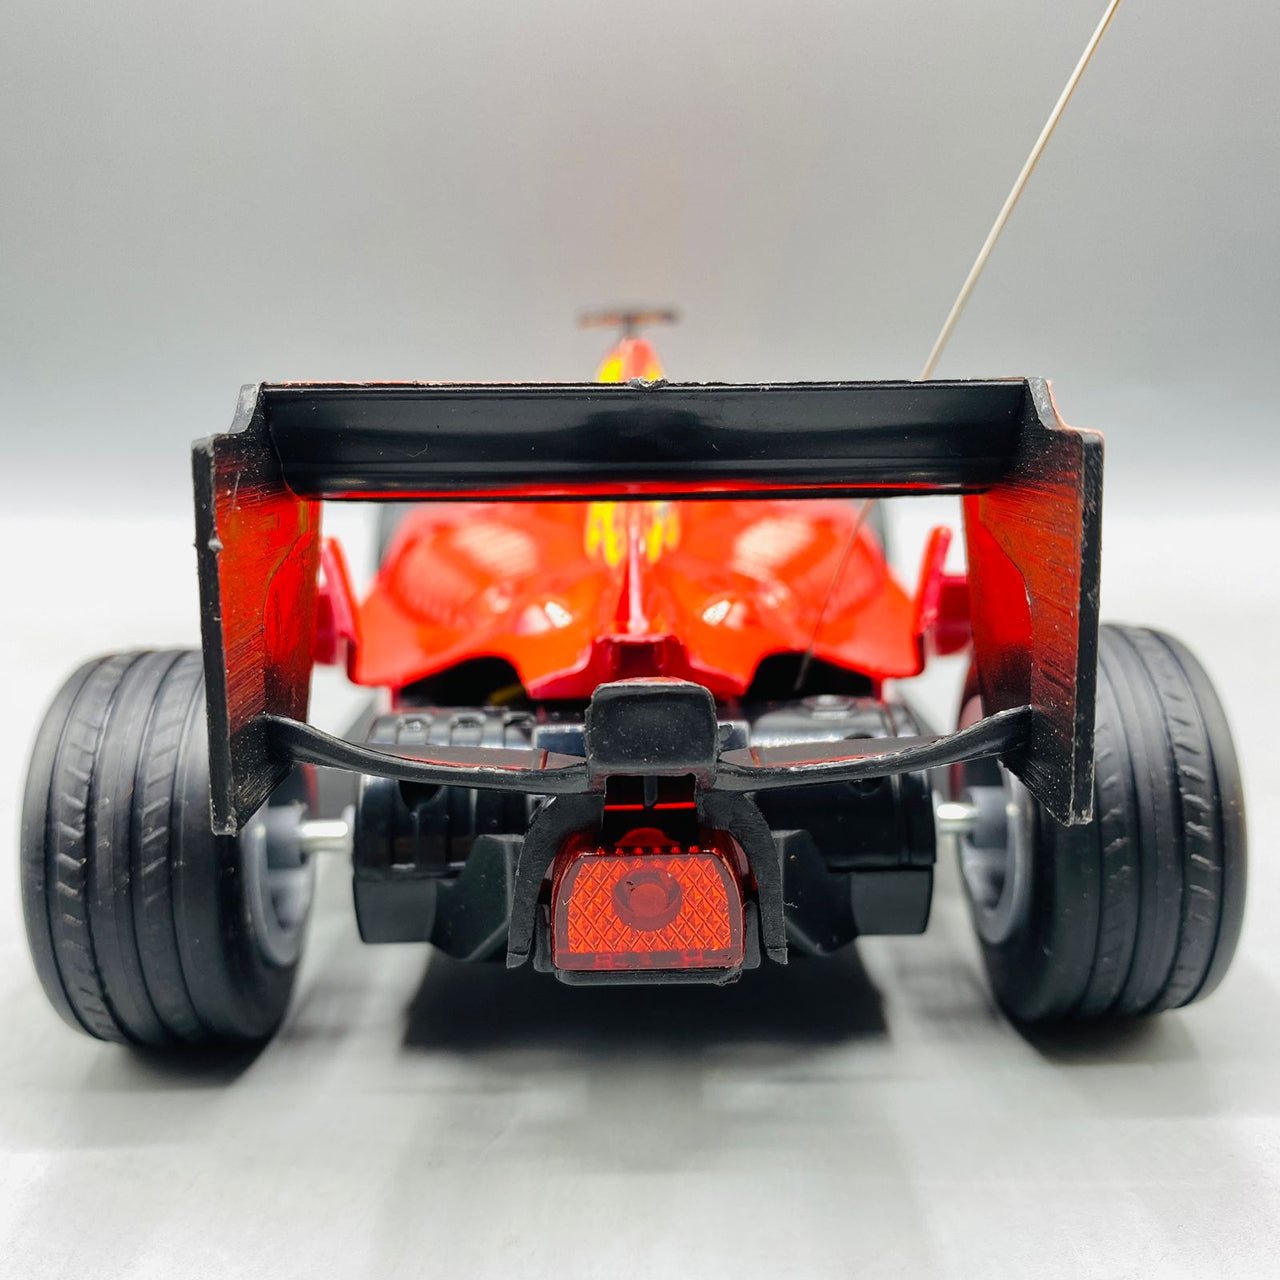 Diecast Super Power Racing Car 1:16 Scale